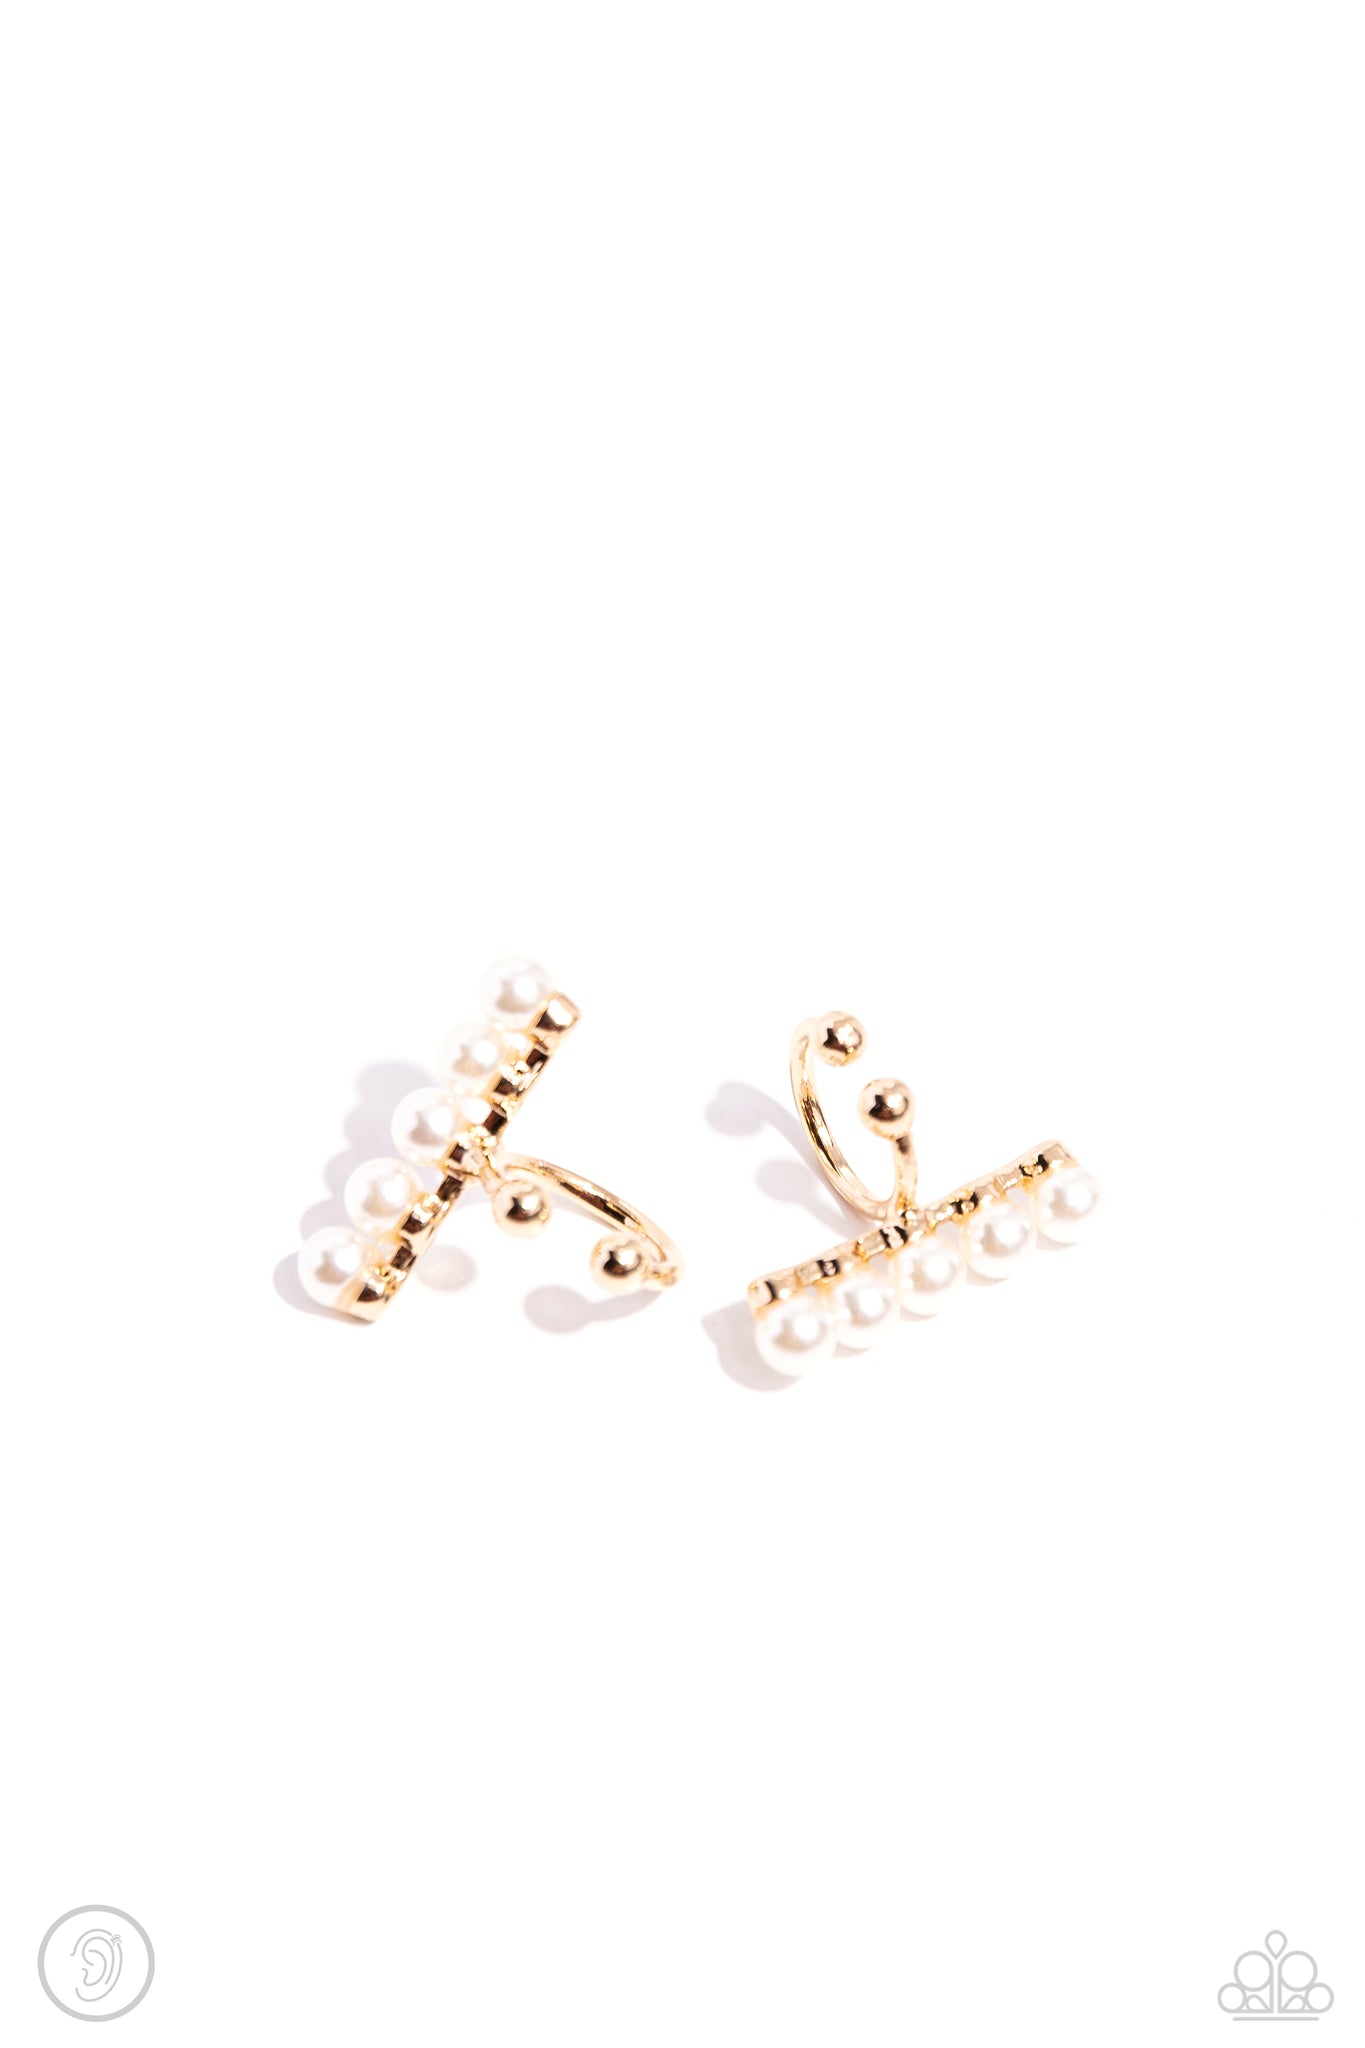 Paparazzi - CUFF Love - Gold Earrings